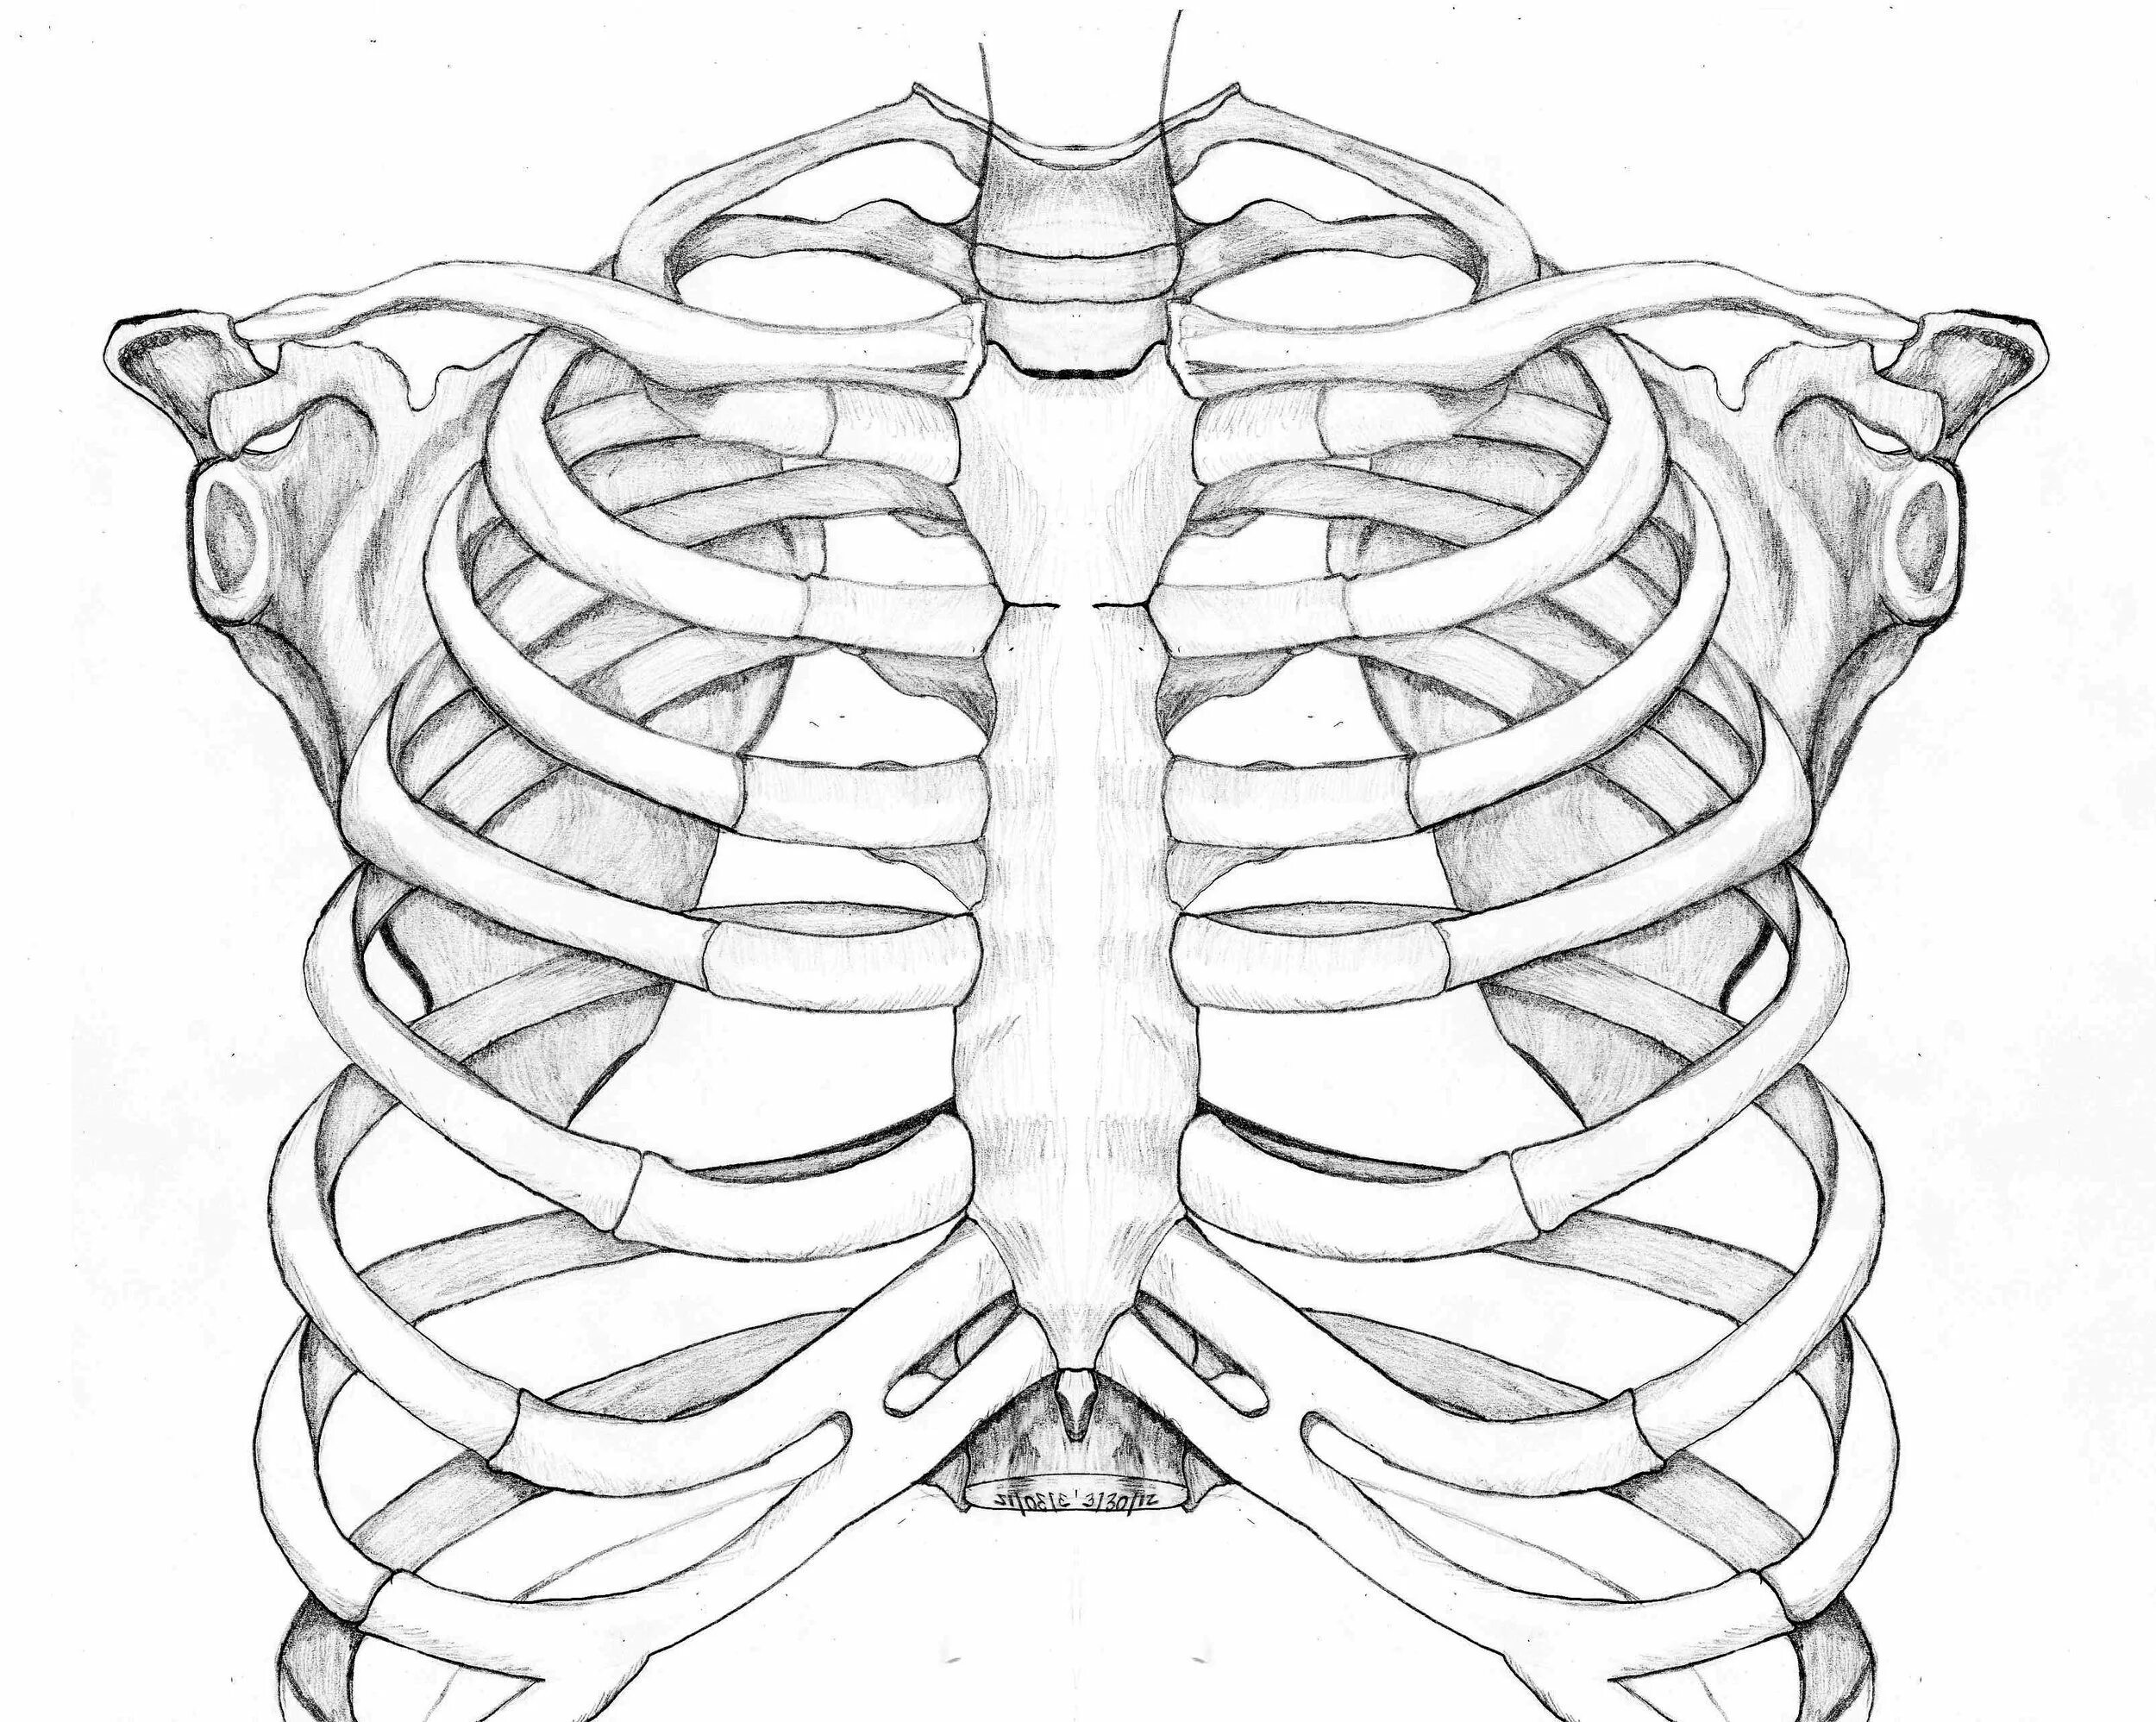 Анатомия скелет грудной клетки ребра Грудина. Ребра скелета референс. Грудная клетка с ребрами и грудиной. Грудная клетка скелет референс.